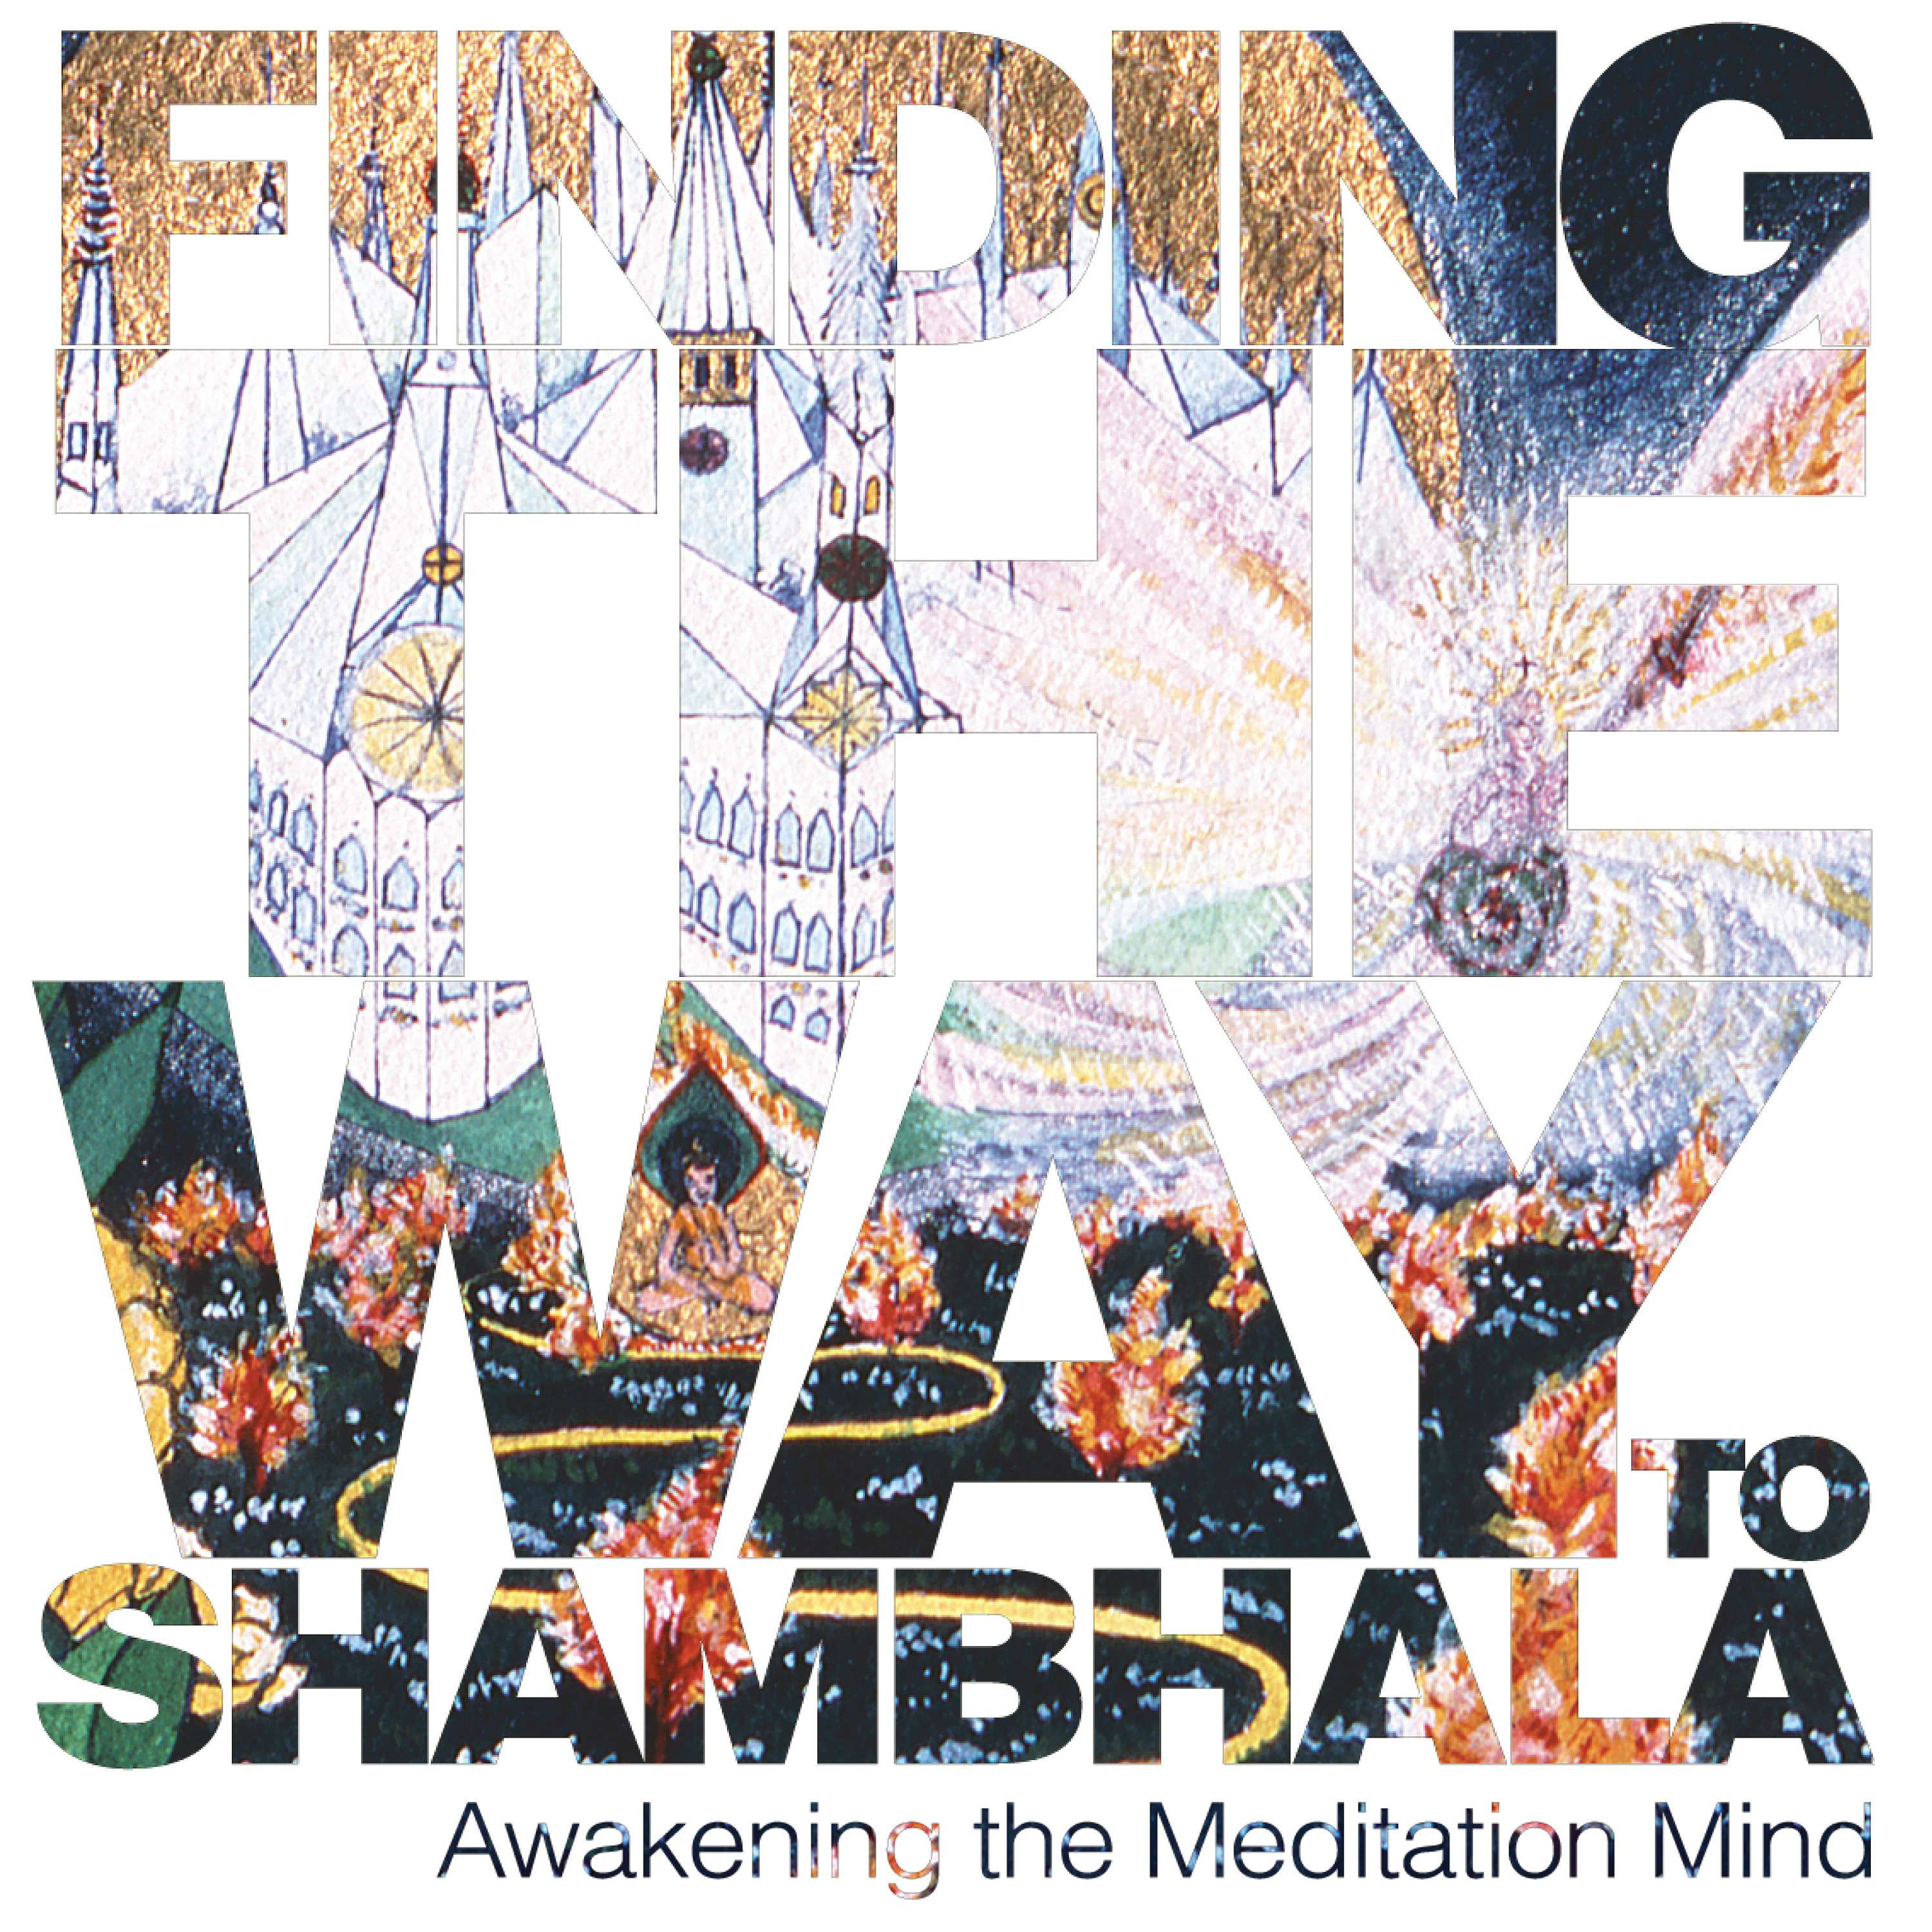 Finding the Way to Shambhala Series